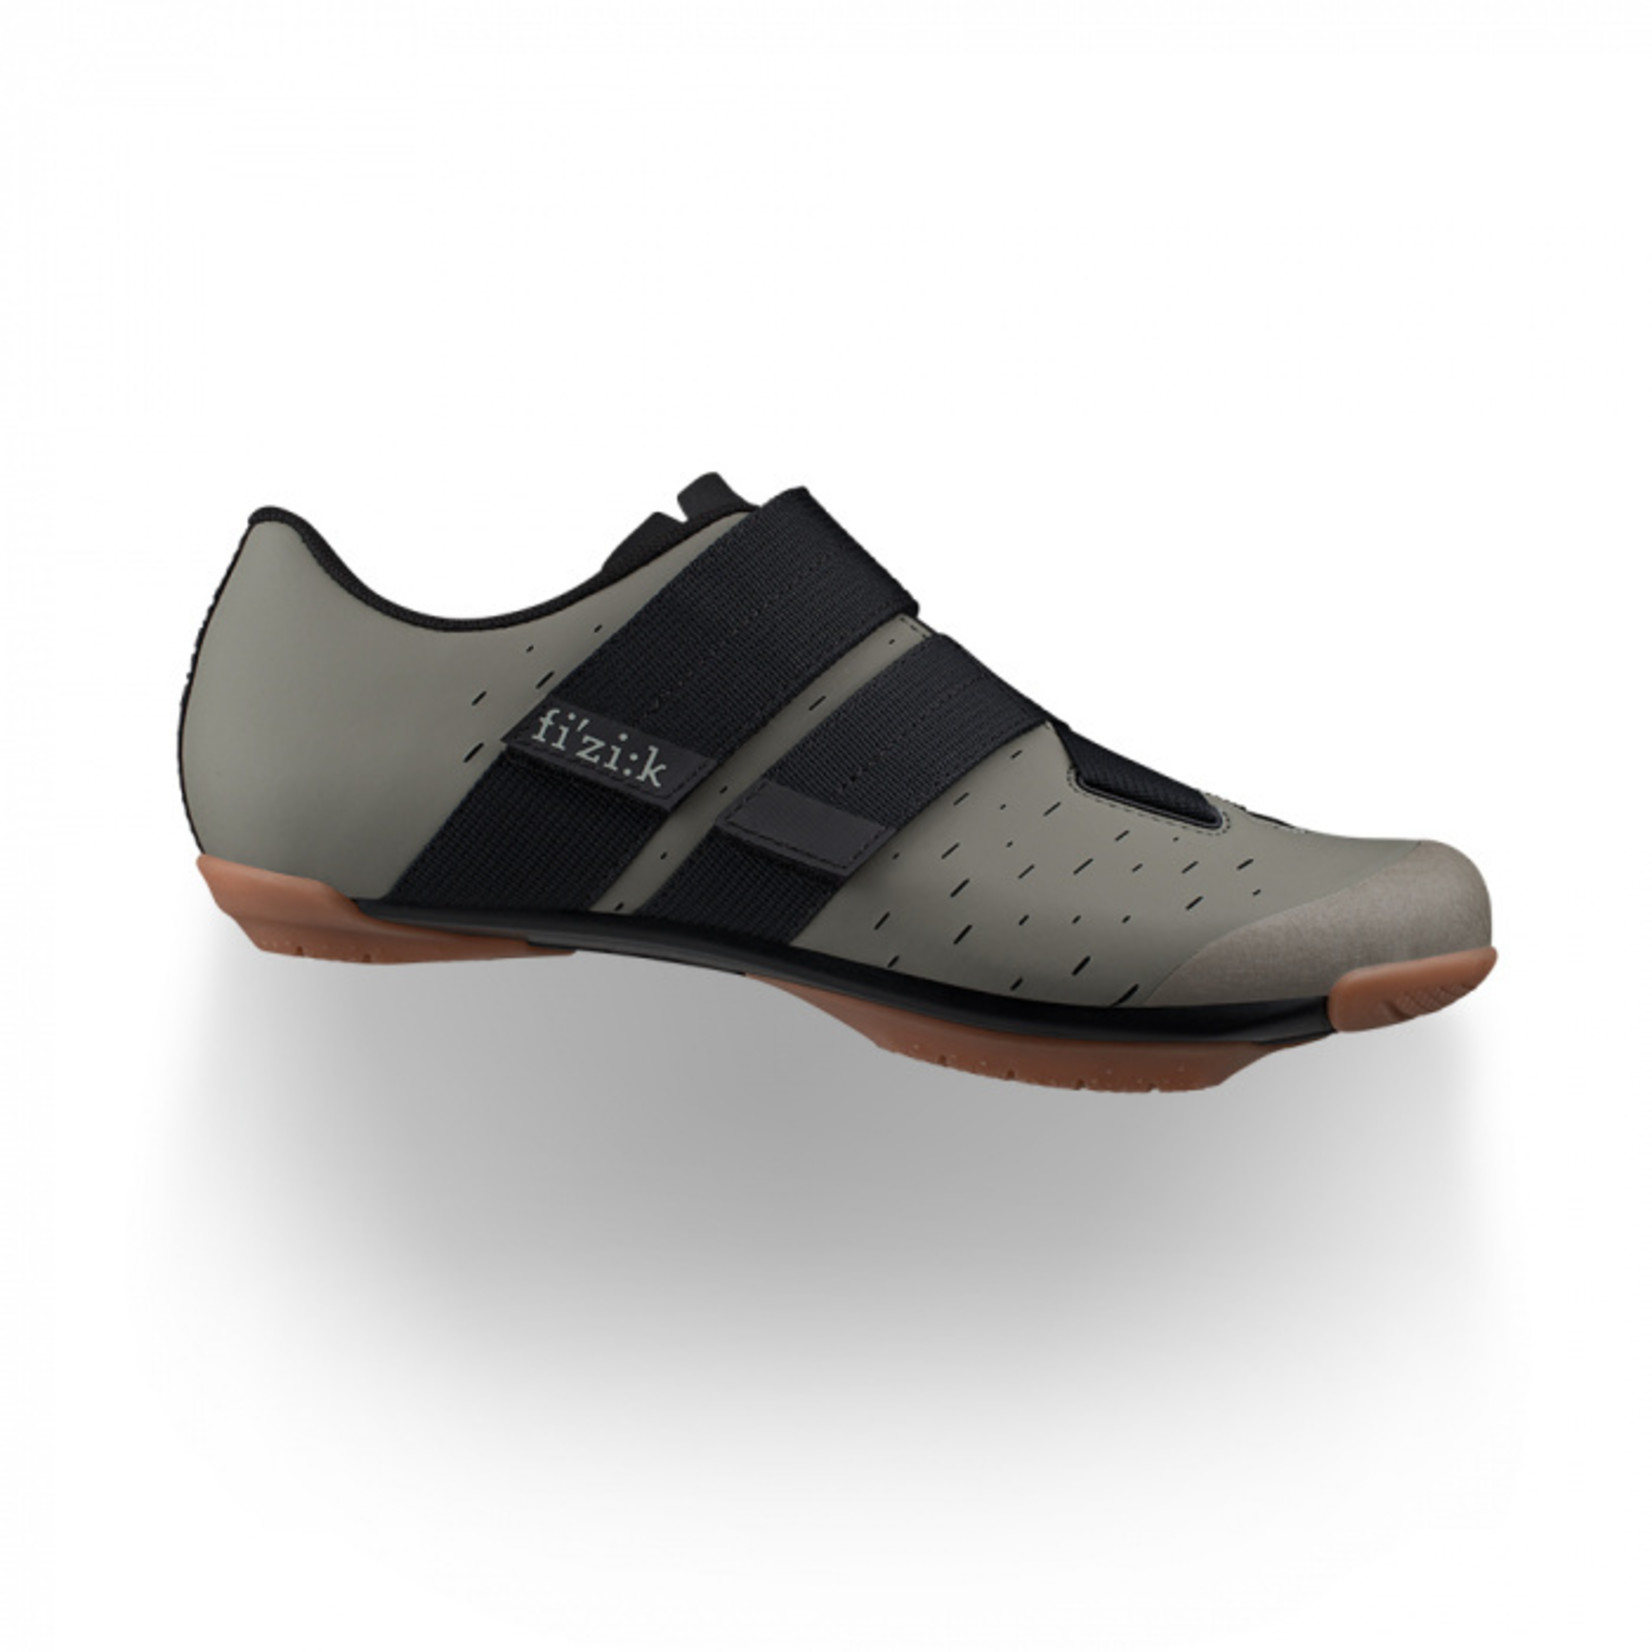 Fizik Terra Powerstrap X4 Gravel Shoes